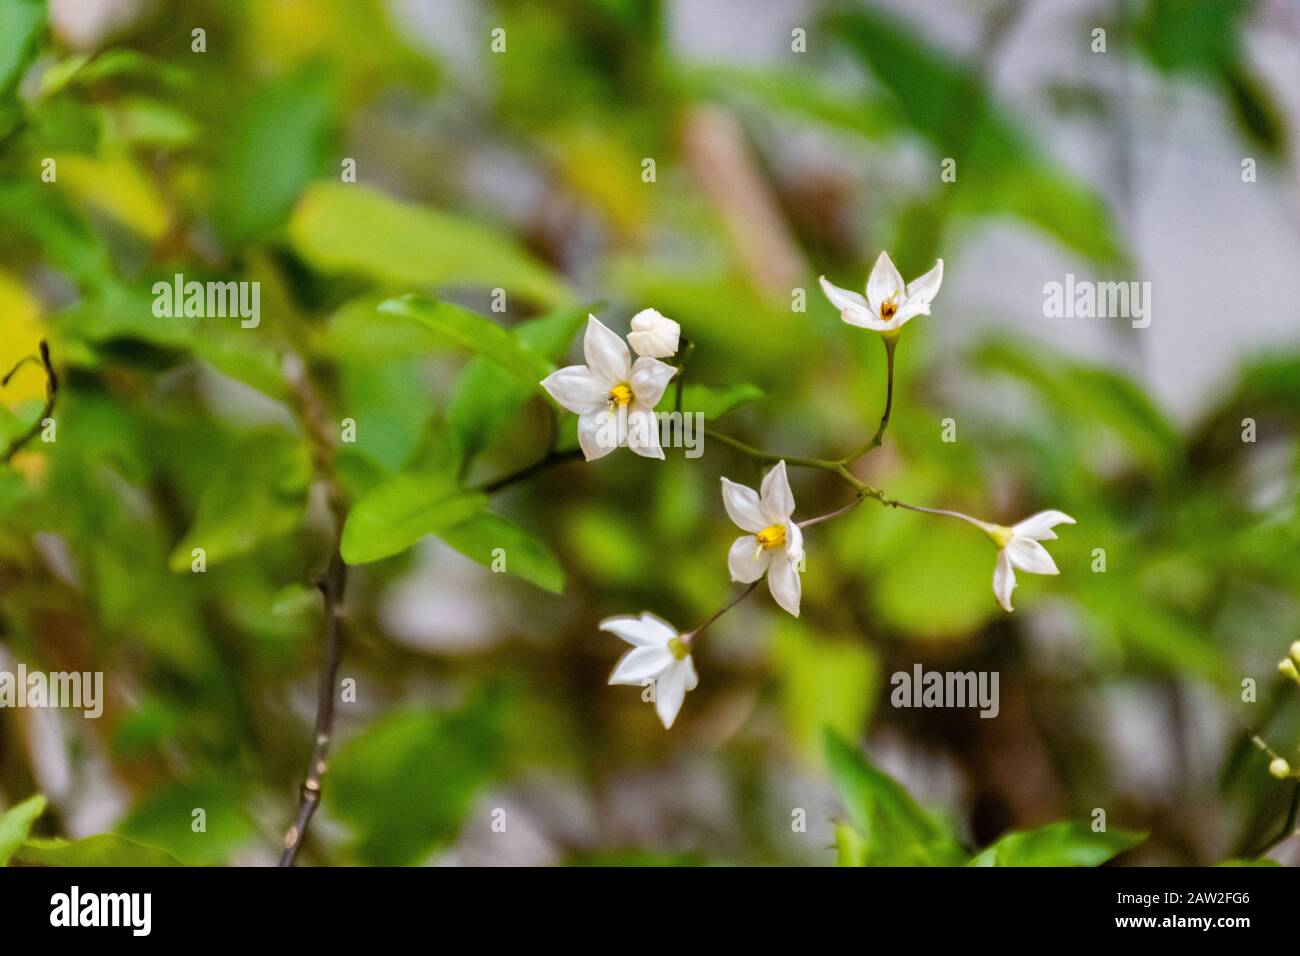 Solanum laxum (potato vine, potato climber or jasmine nightshade) flowers close-up shot Stock Photo